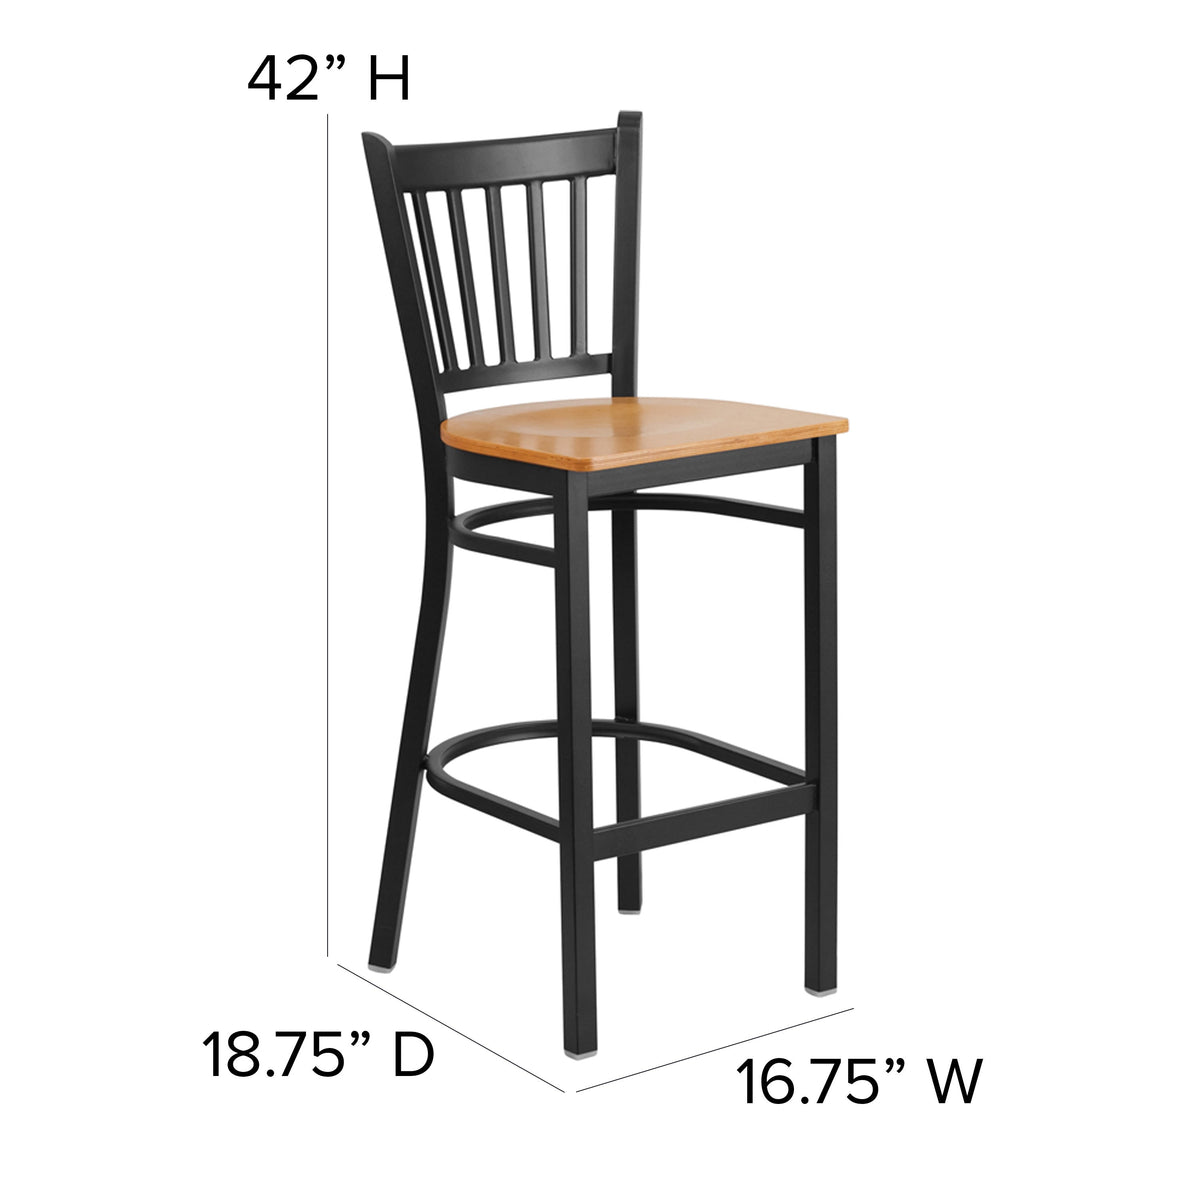 Natural Wood Seat/Black Metal Frame |#| Black Vertical Back Metal Restaurant Barstool - Natural Wood Seat